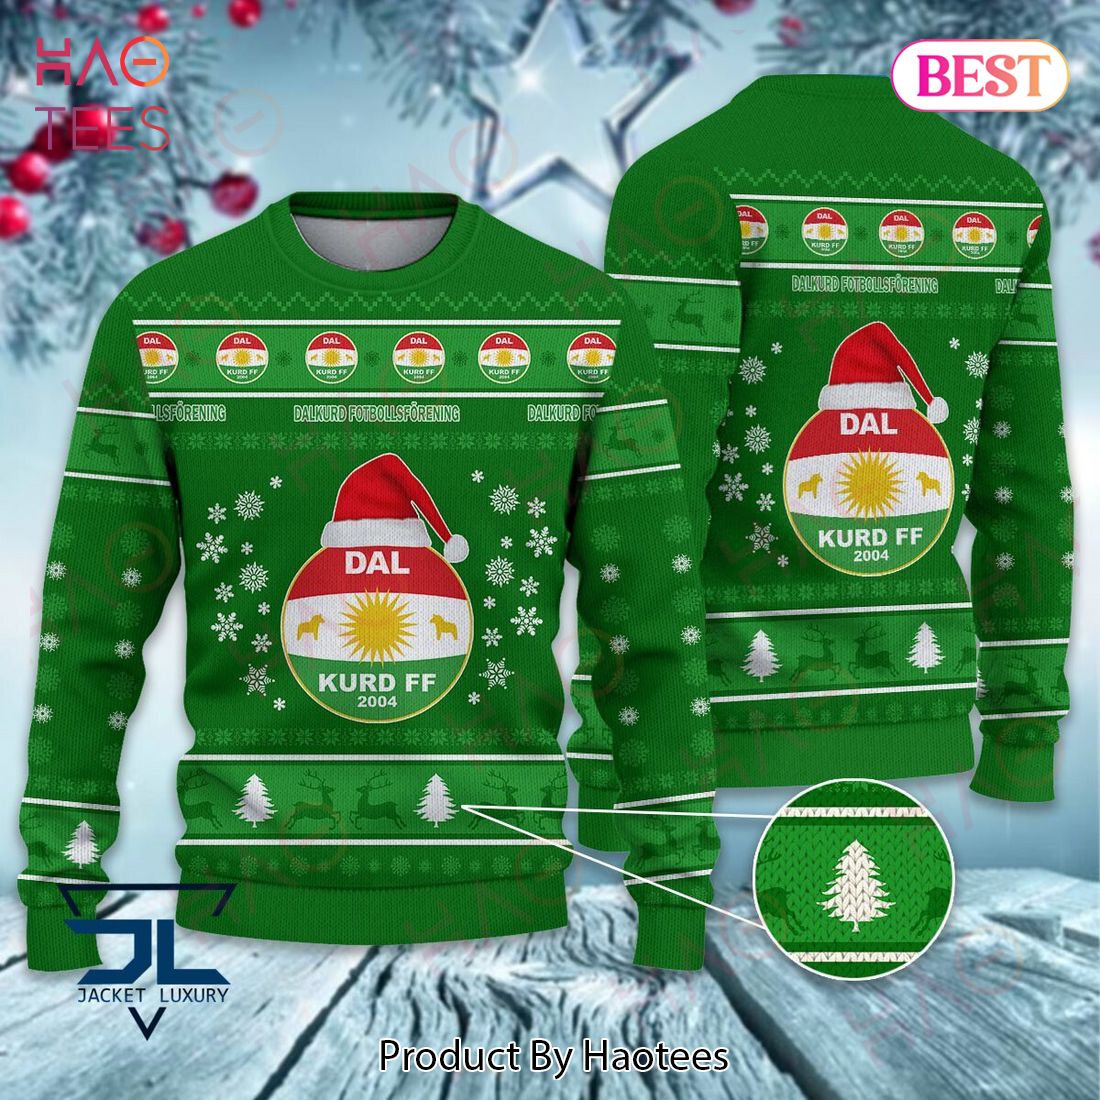 HOT Dalkurd Fotbollsforening Kurd FF 2004  Christmas Luxury Brand Sweater Limited Edition